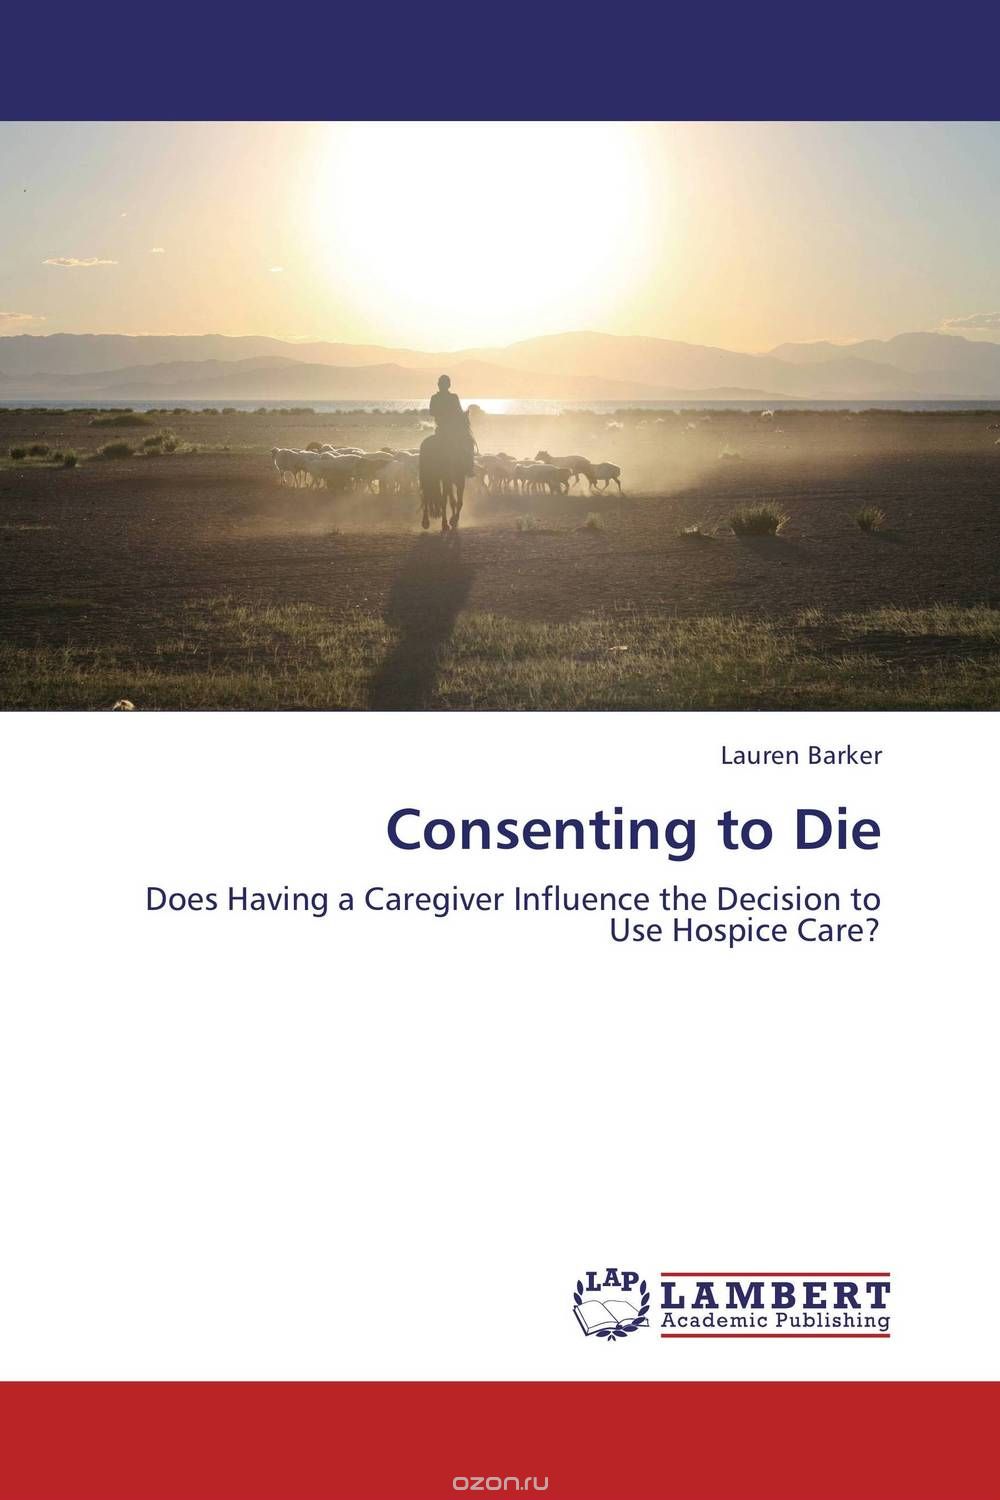 Скачать книгу "Consenting to Die"